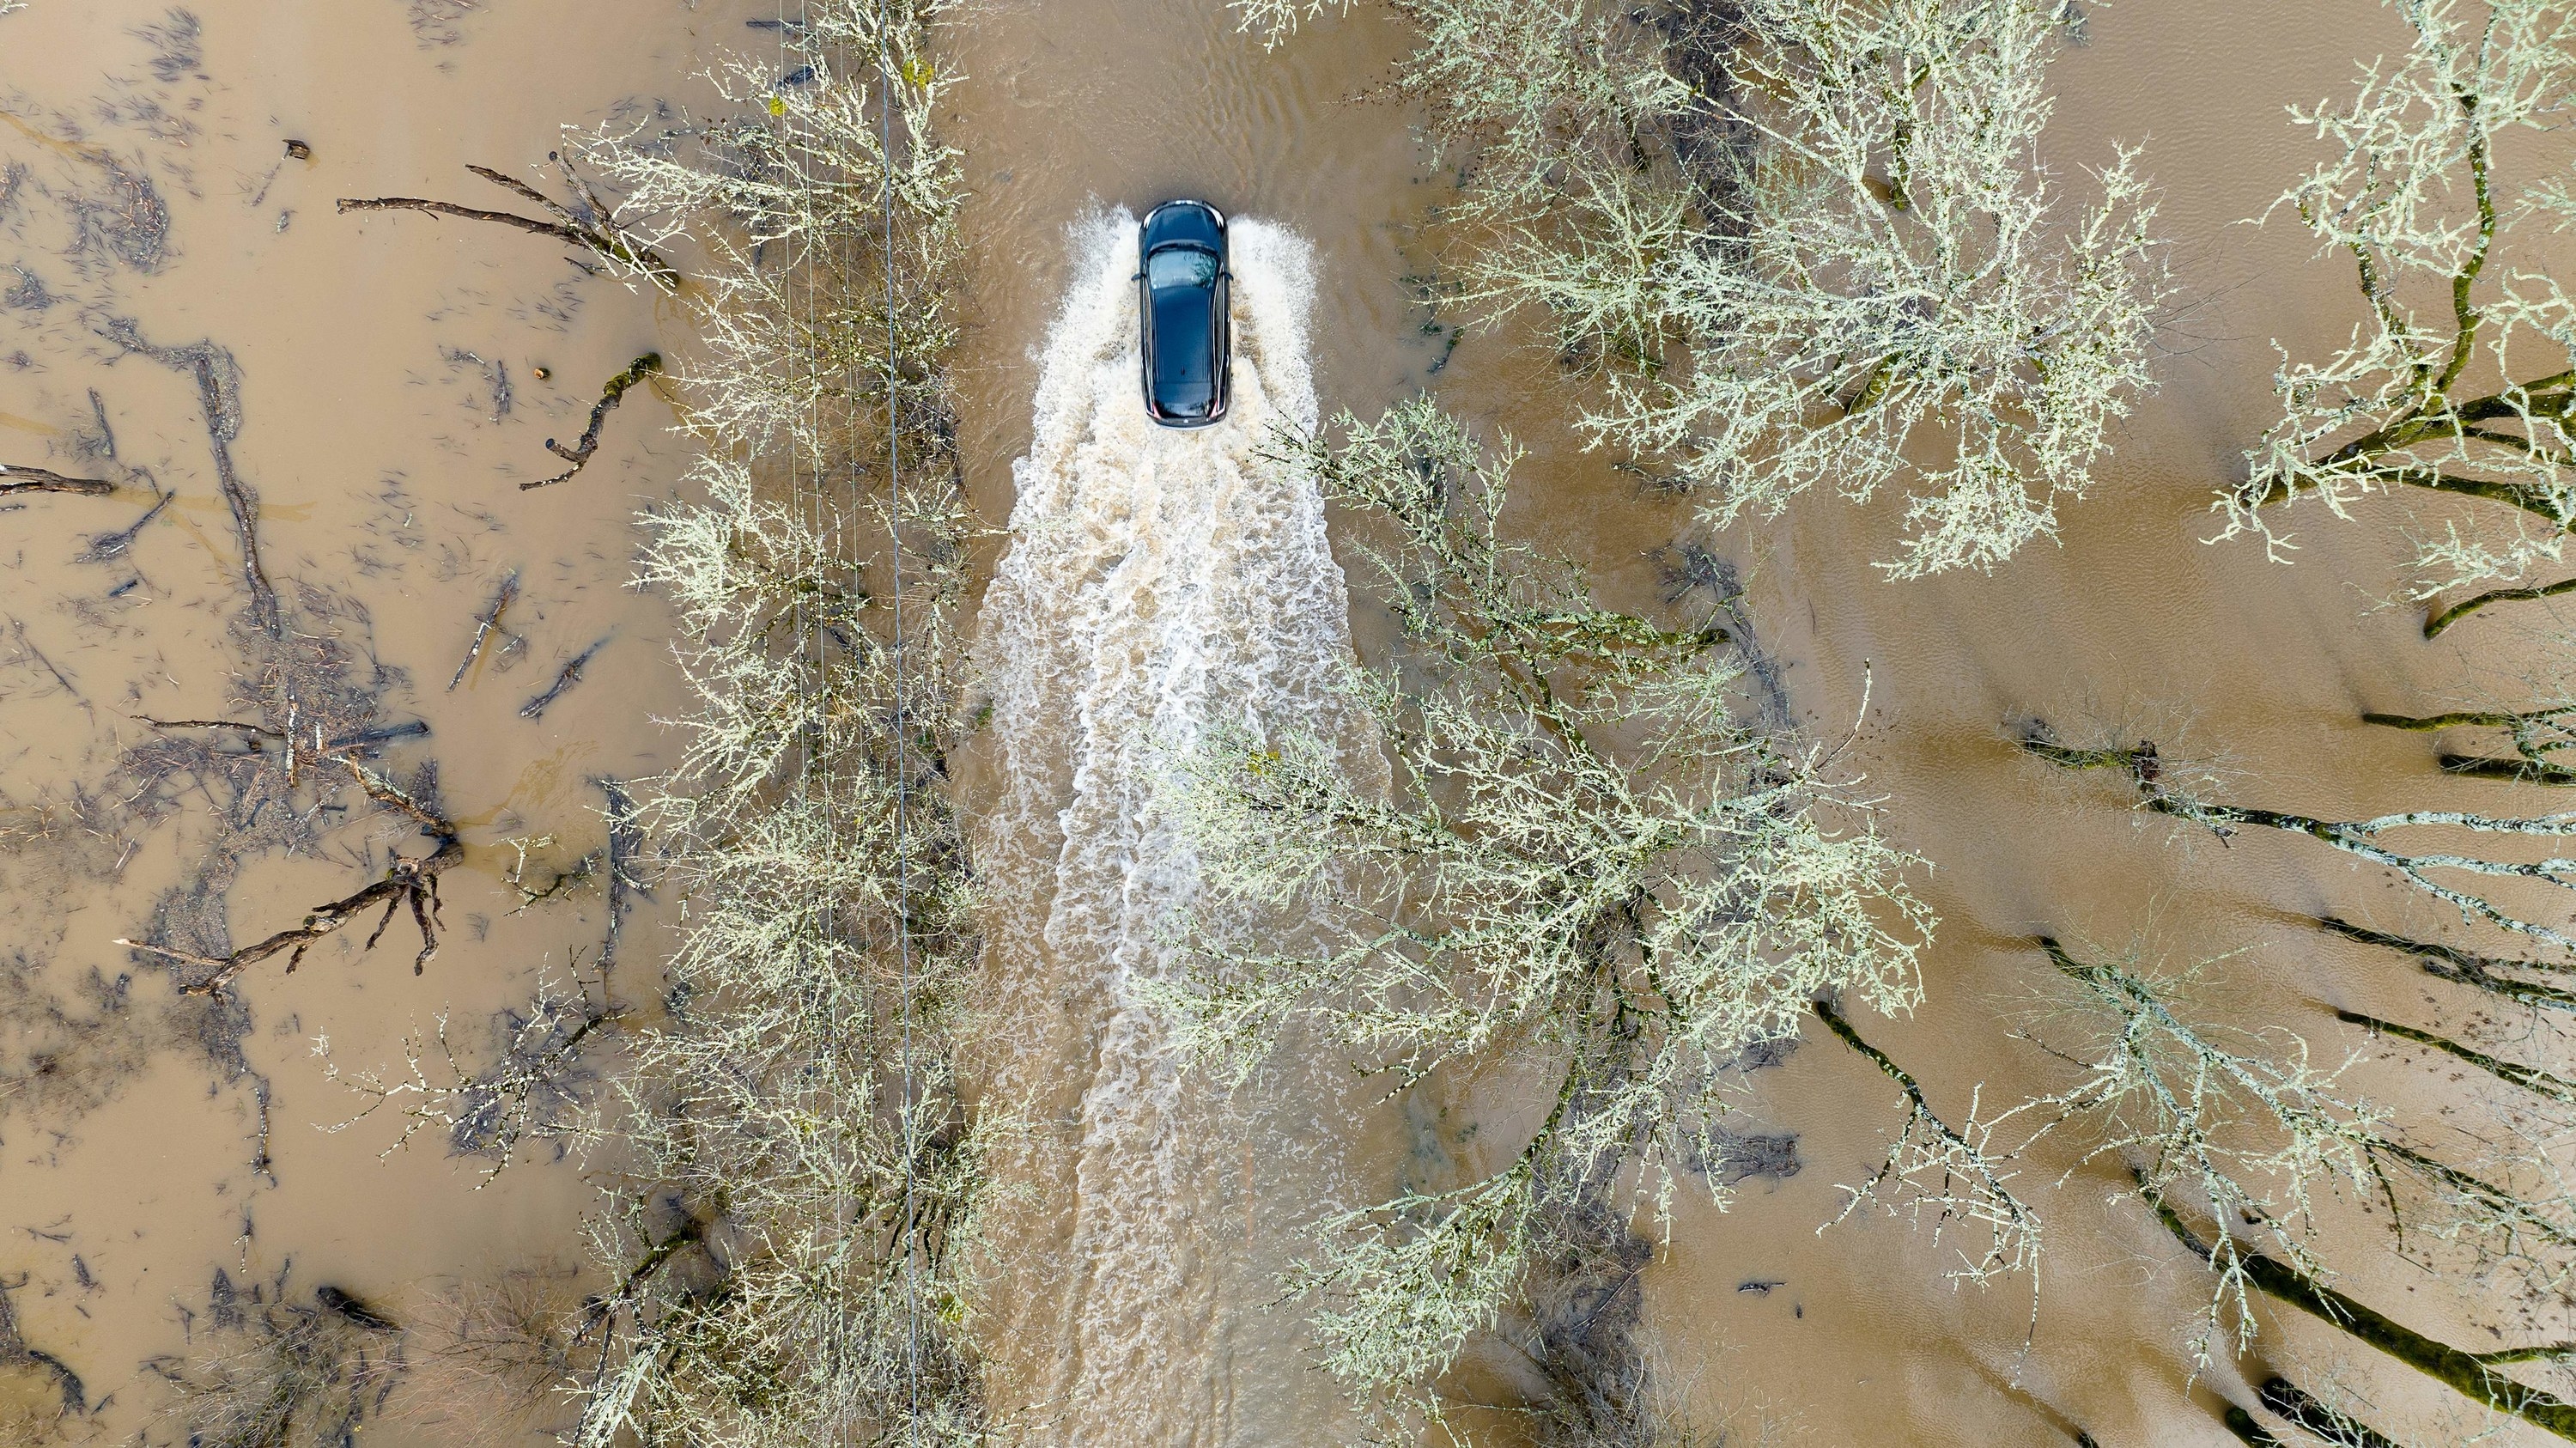 A topshot of a car driving through deep muddy water.